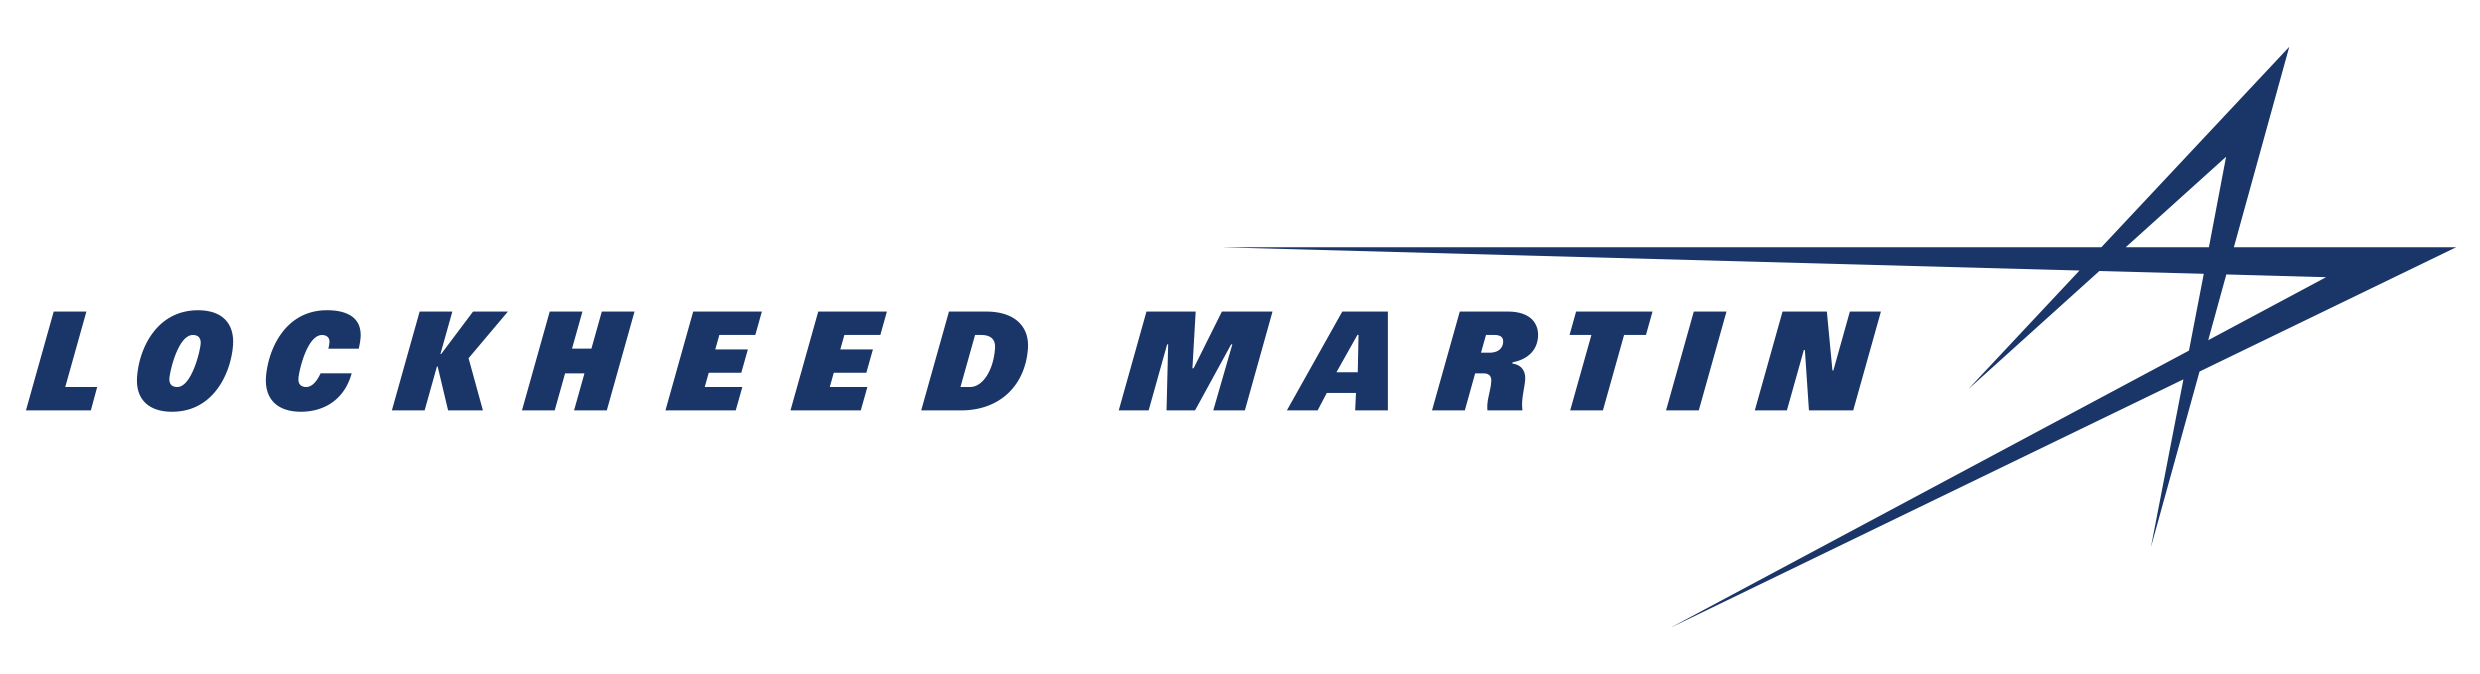 American Aero Corp Logo - Lockheed Martin Corporation | Lockheed Martin